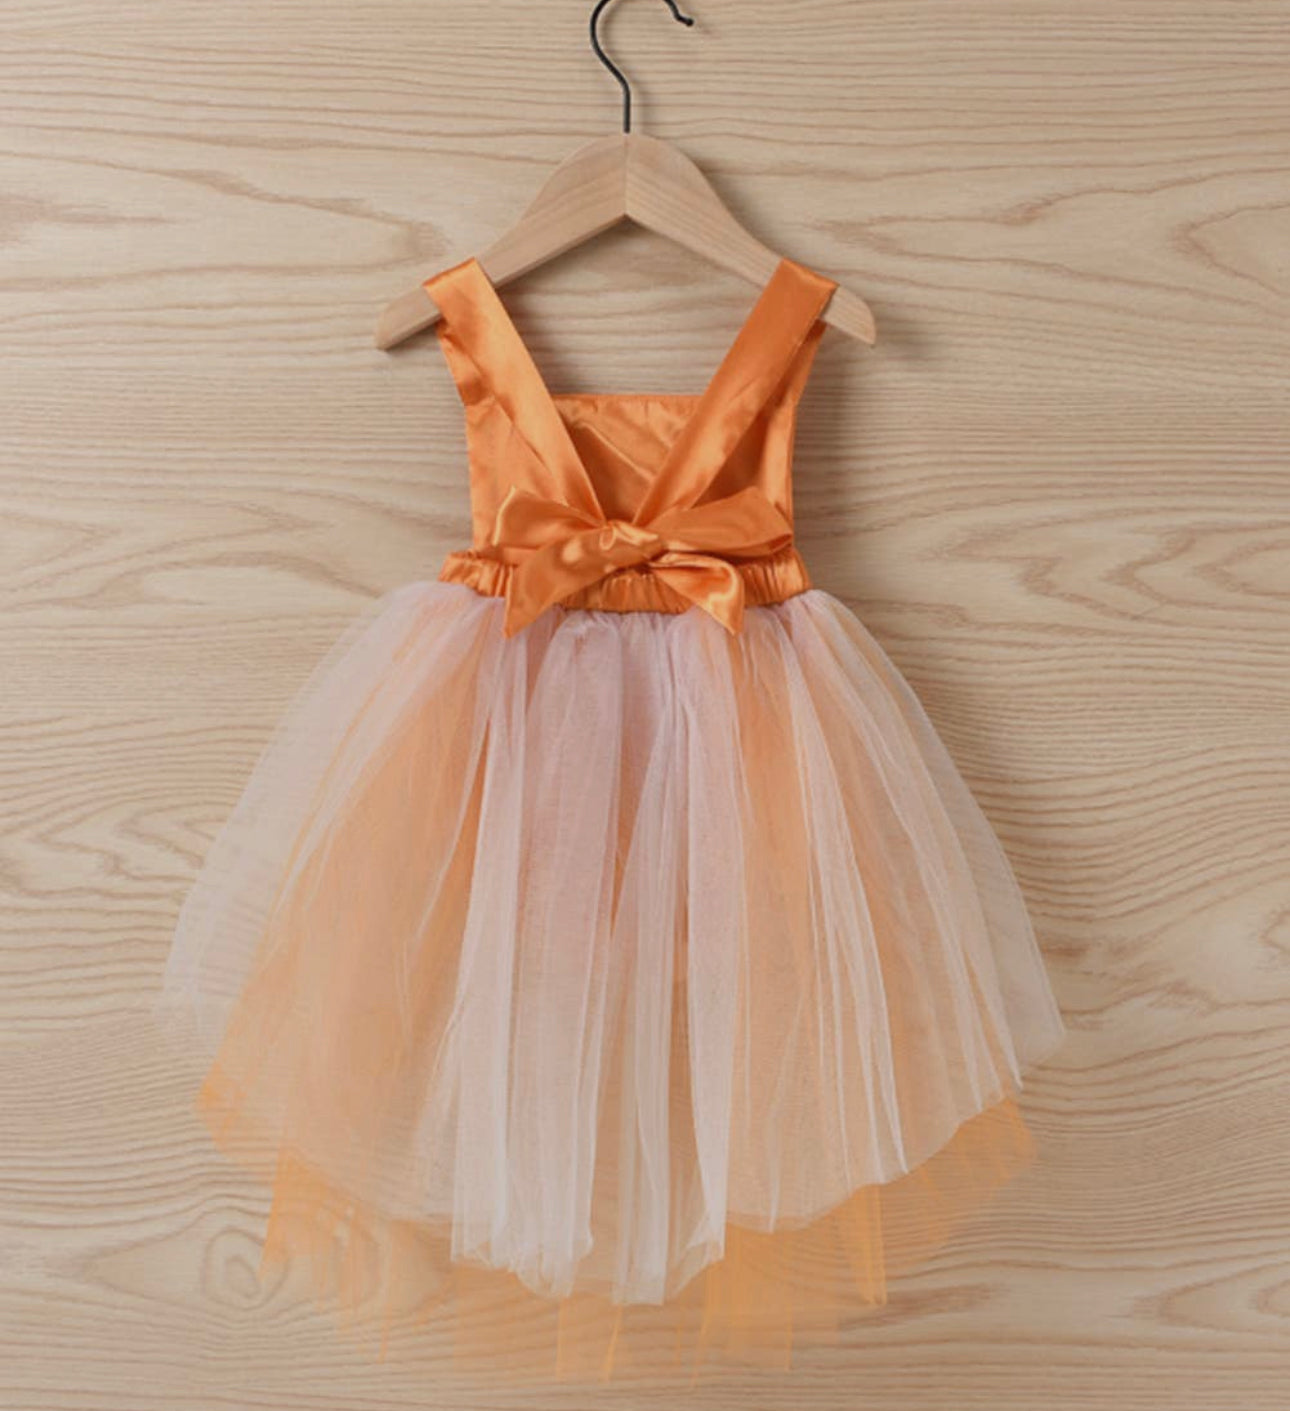 Peach dress for baby girl